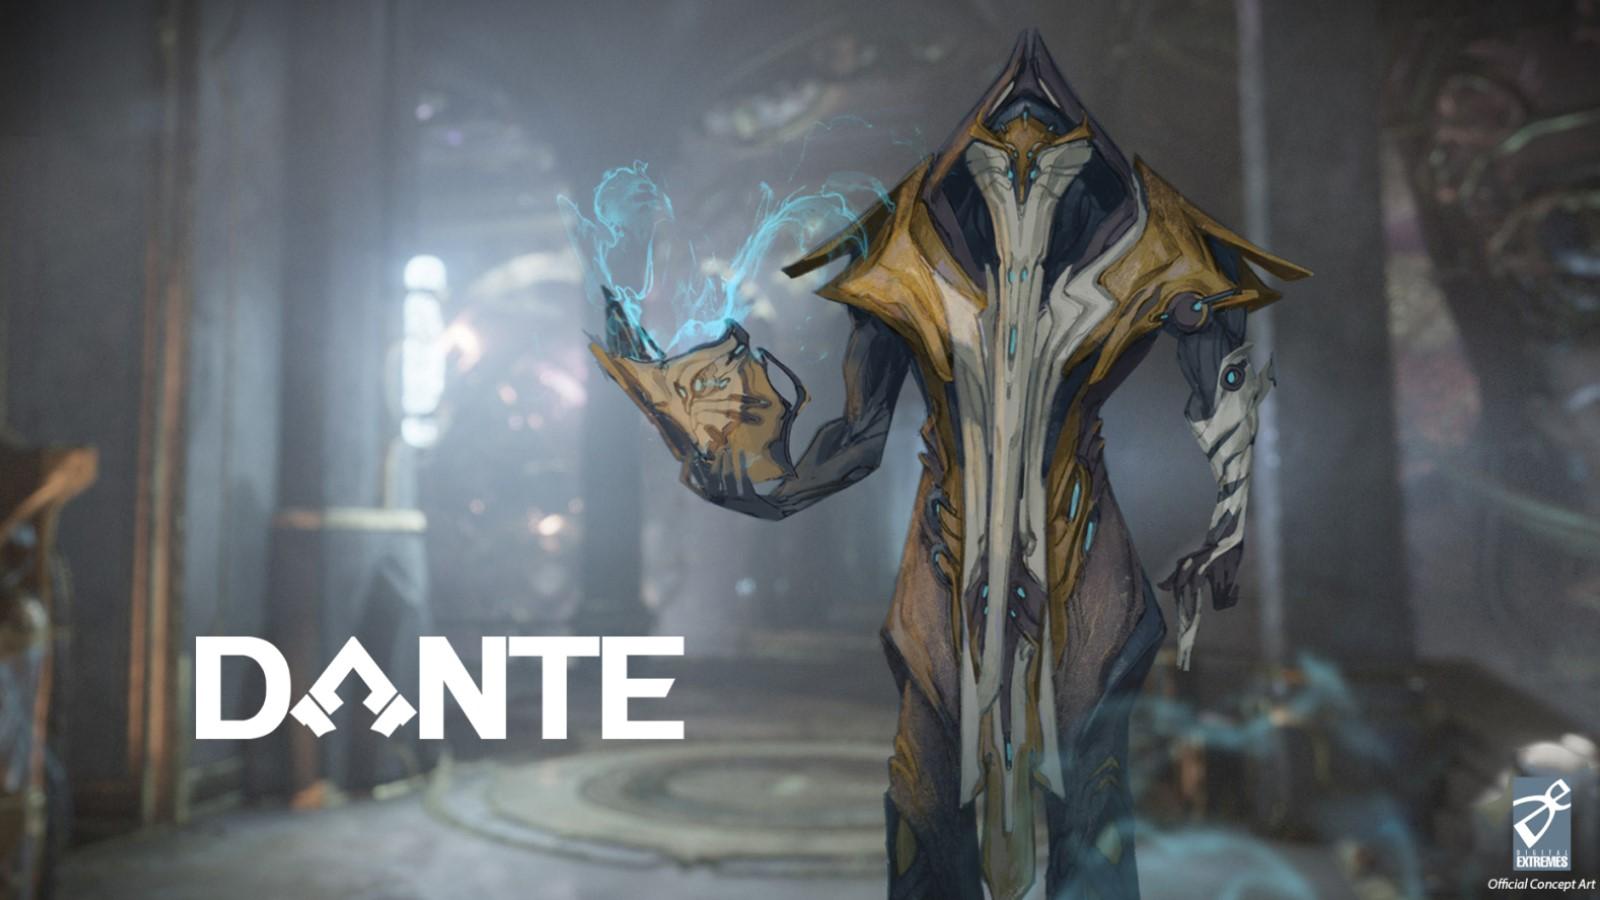 The new Dante Warframe in the Dante Unbound update